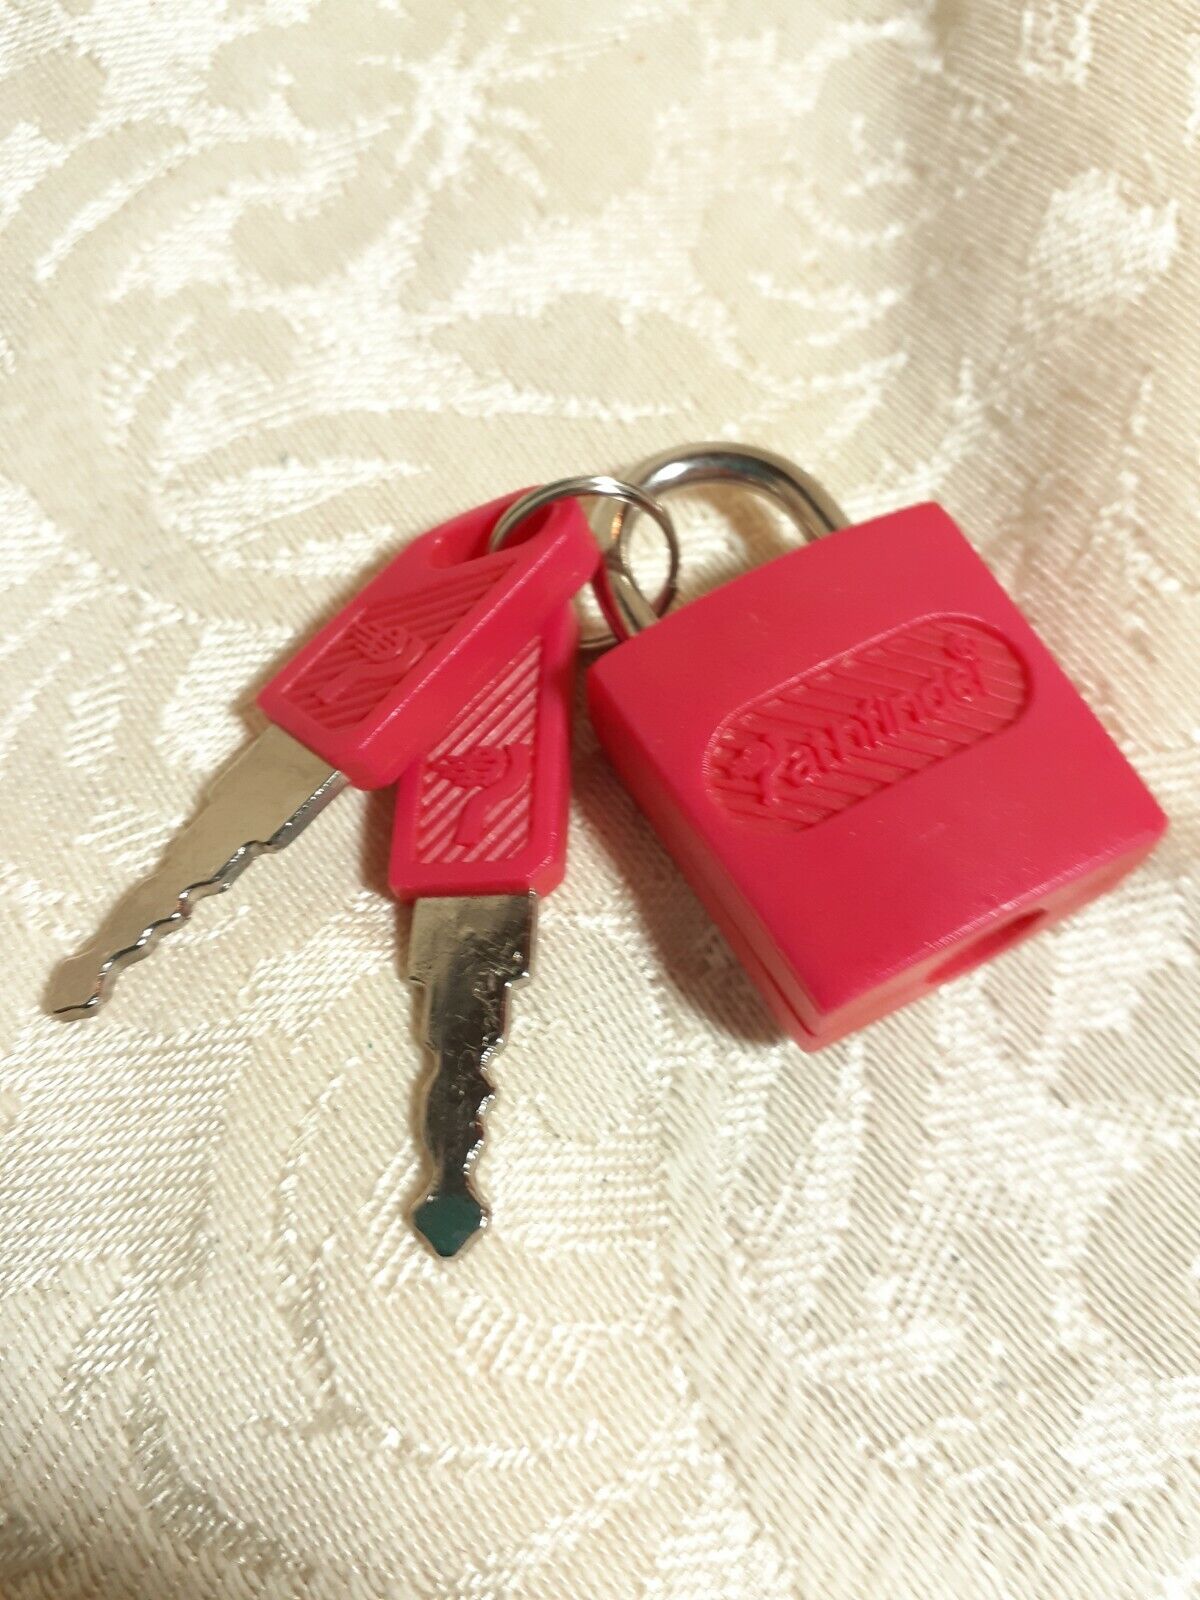 Pathfinder Red Luggage Key Lock W/ 2 User Keys